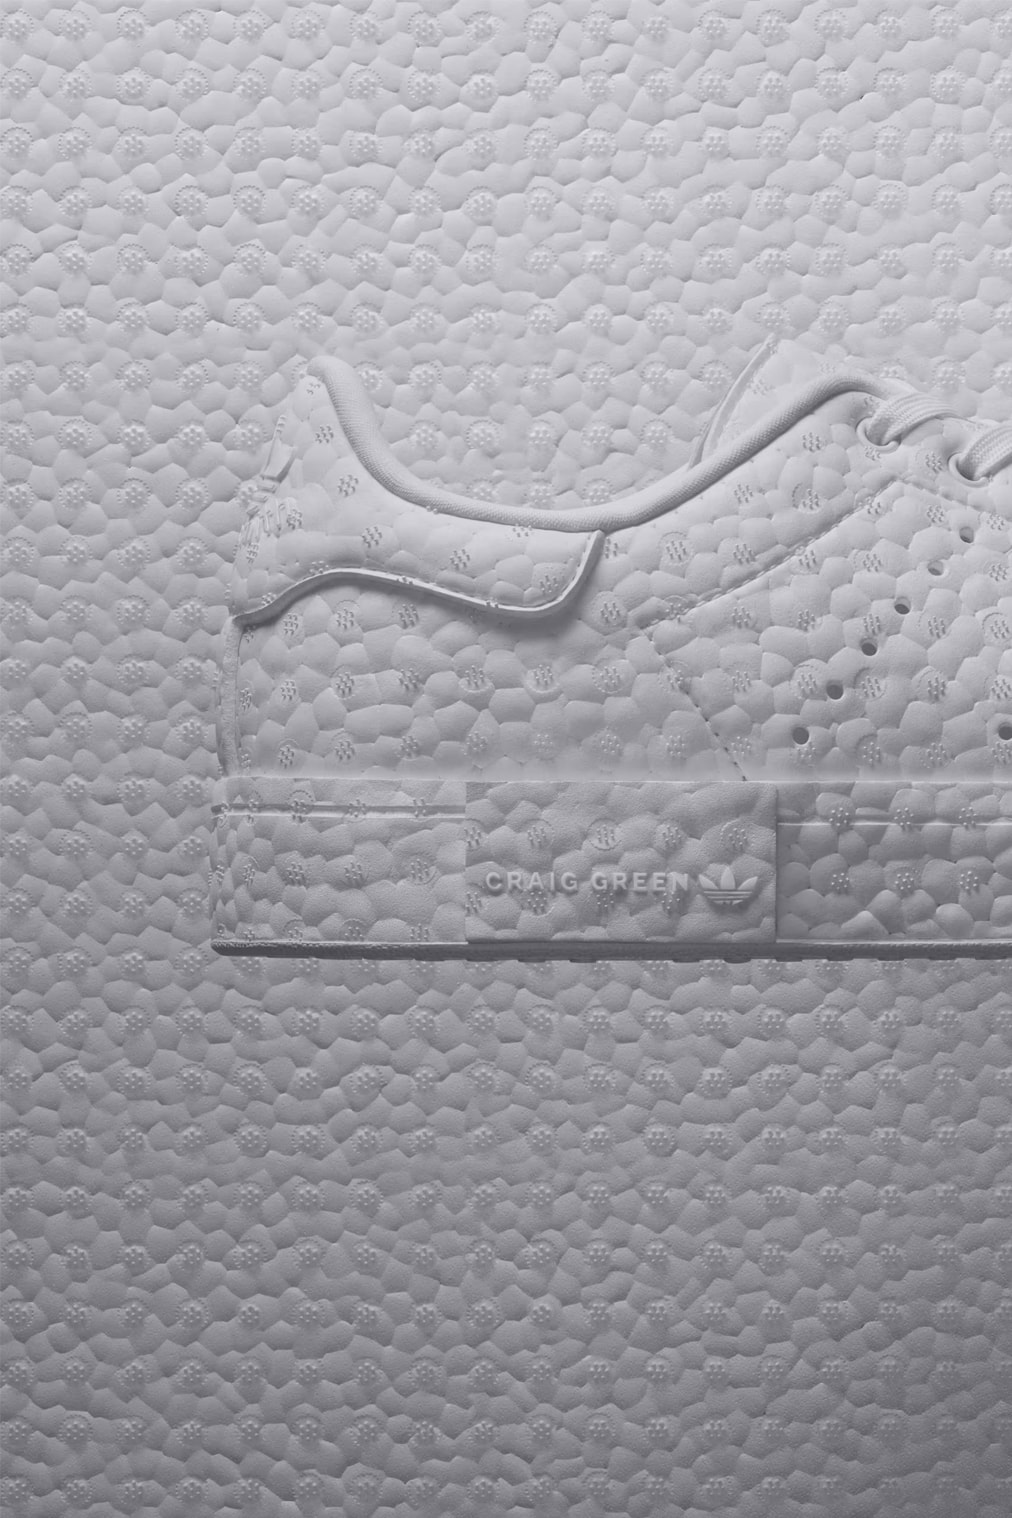 adidas Originals 攜手 Craig Green 打造全新 Stan Smith 聯名鞋款